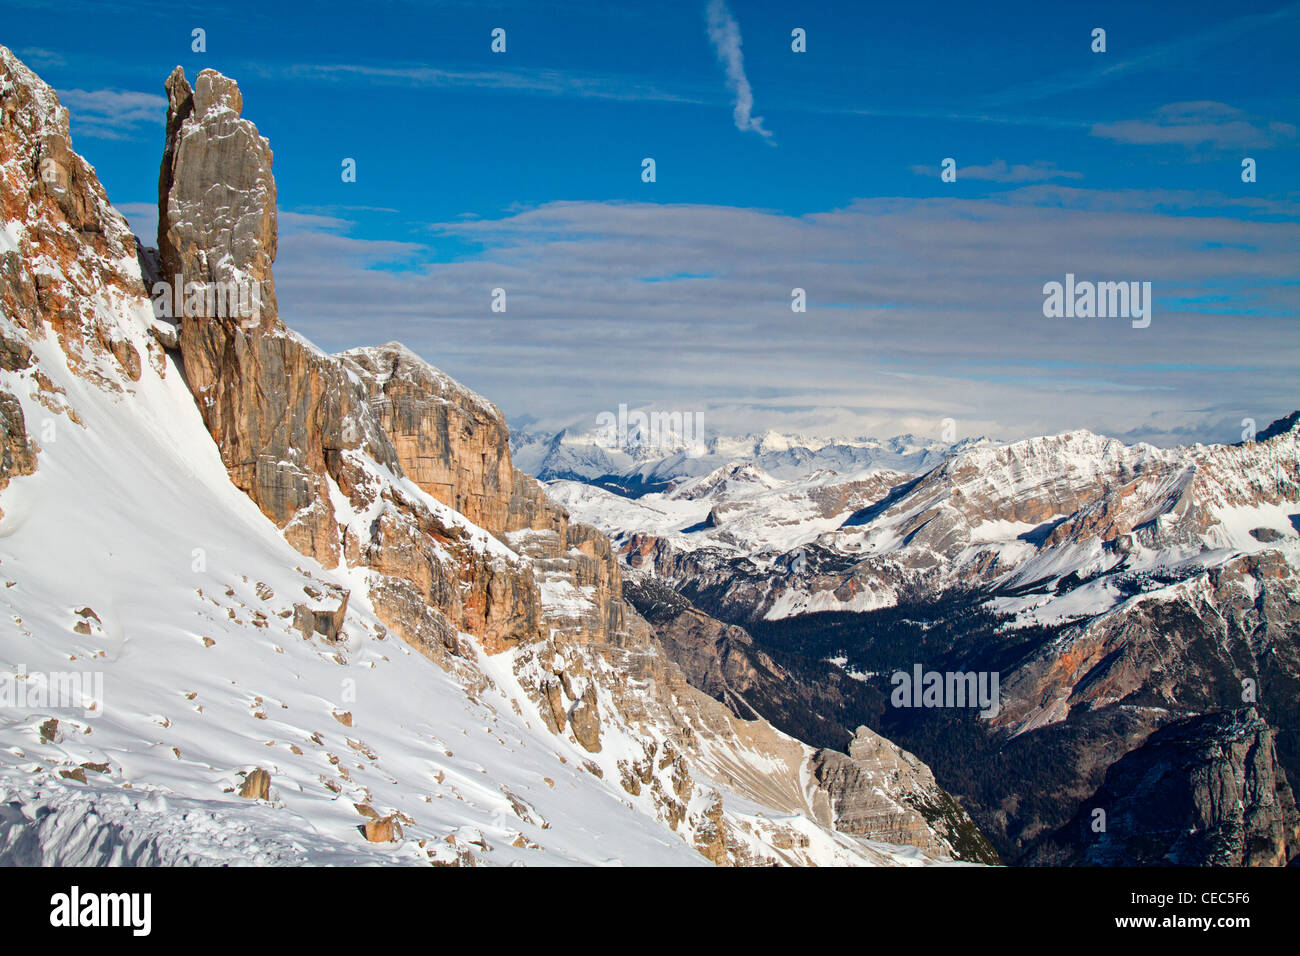 View from Tofana, Cortina d'Ampezzo over Dolomites, Italy Stock Photo